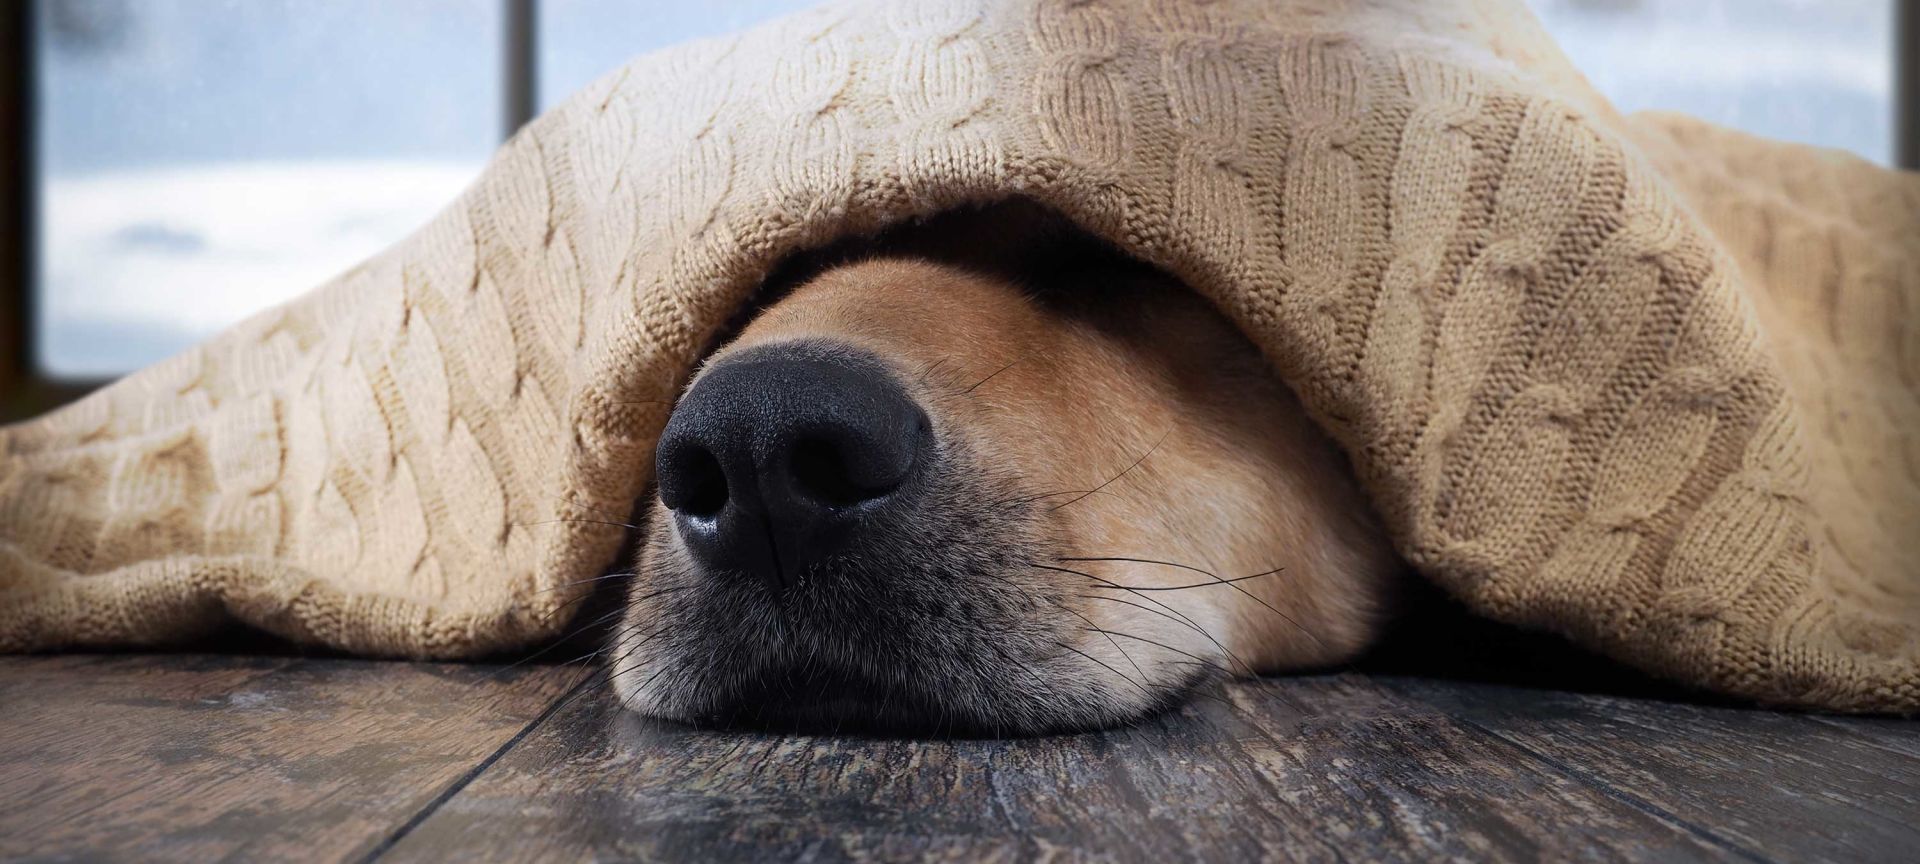 Dog Under a Blanket